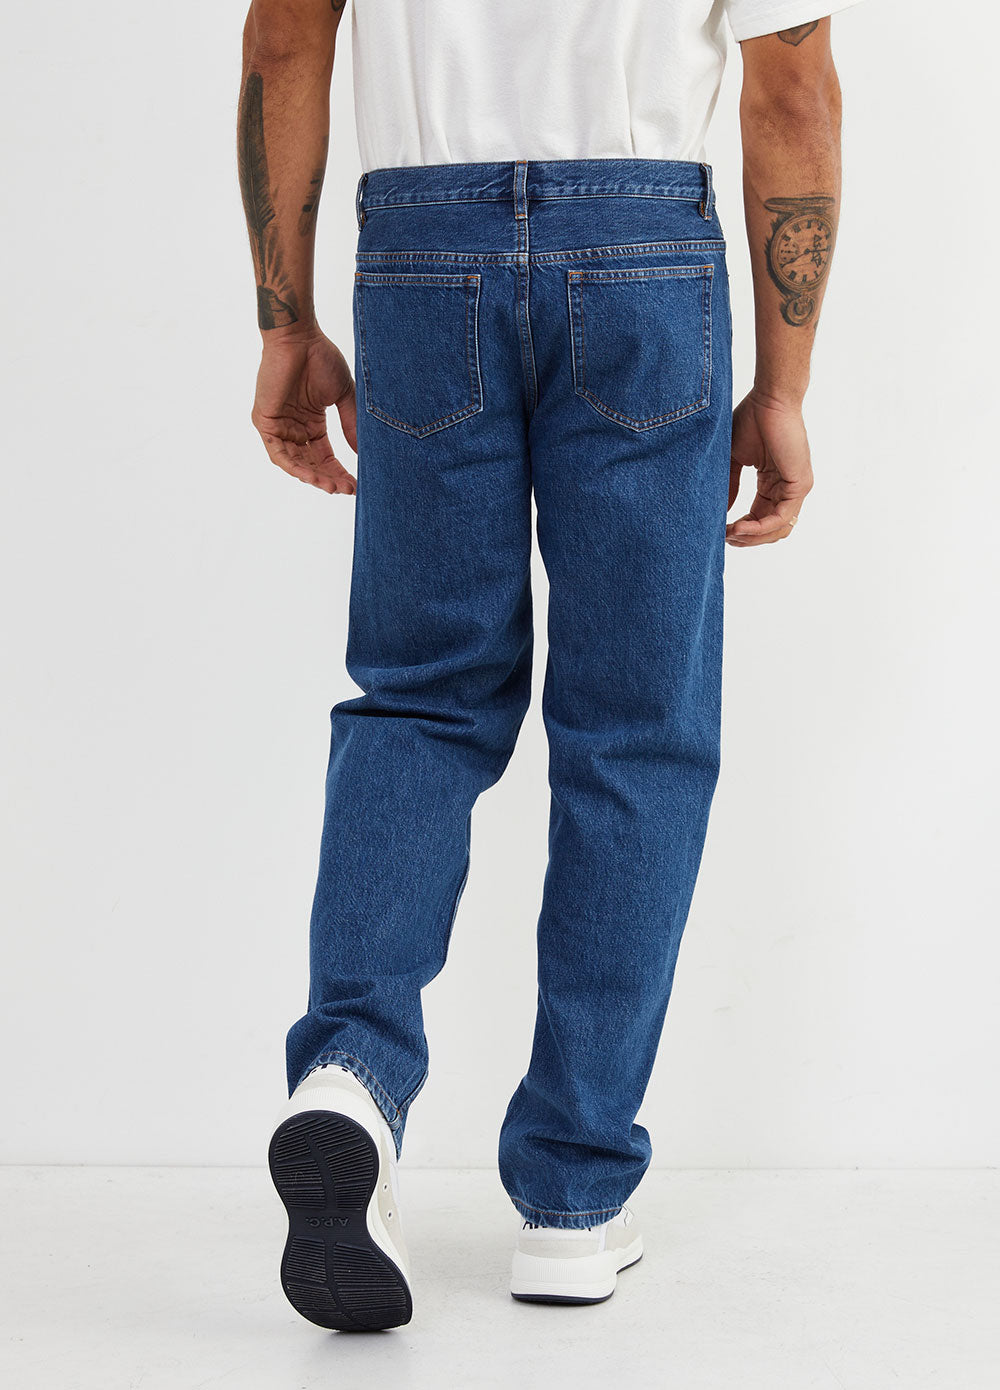 Men's Washed indigo Martin Jeans by A.P.C. | Incu